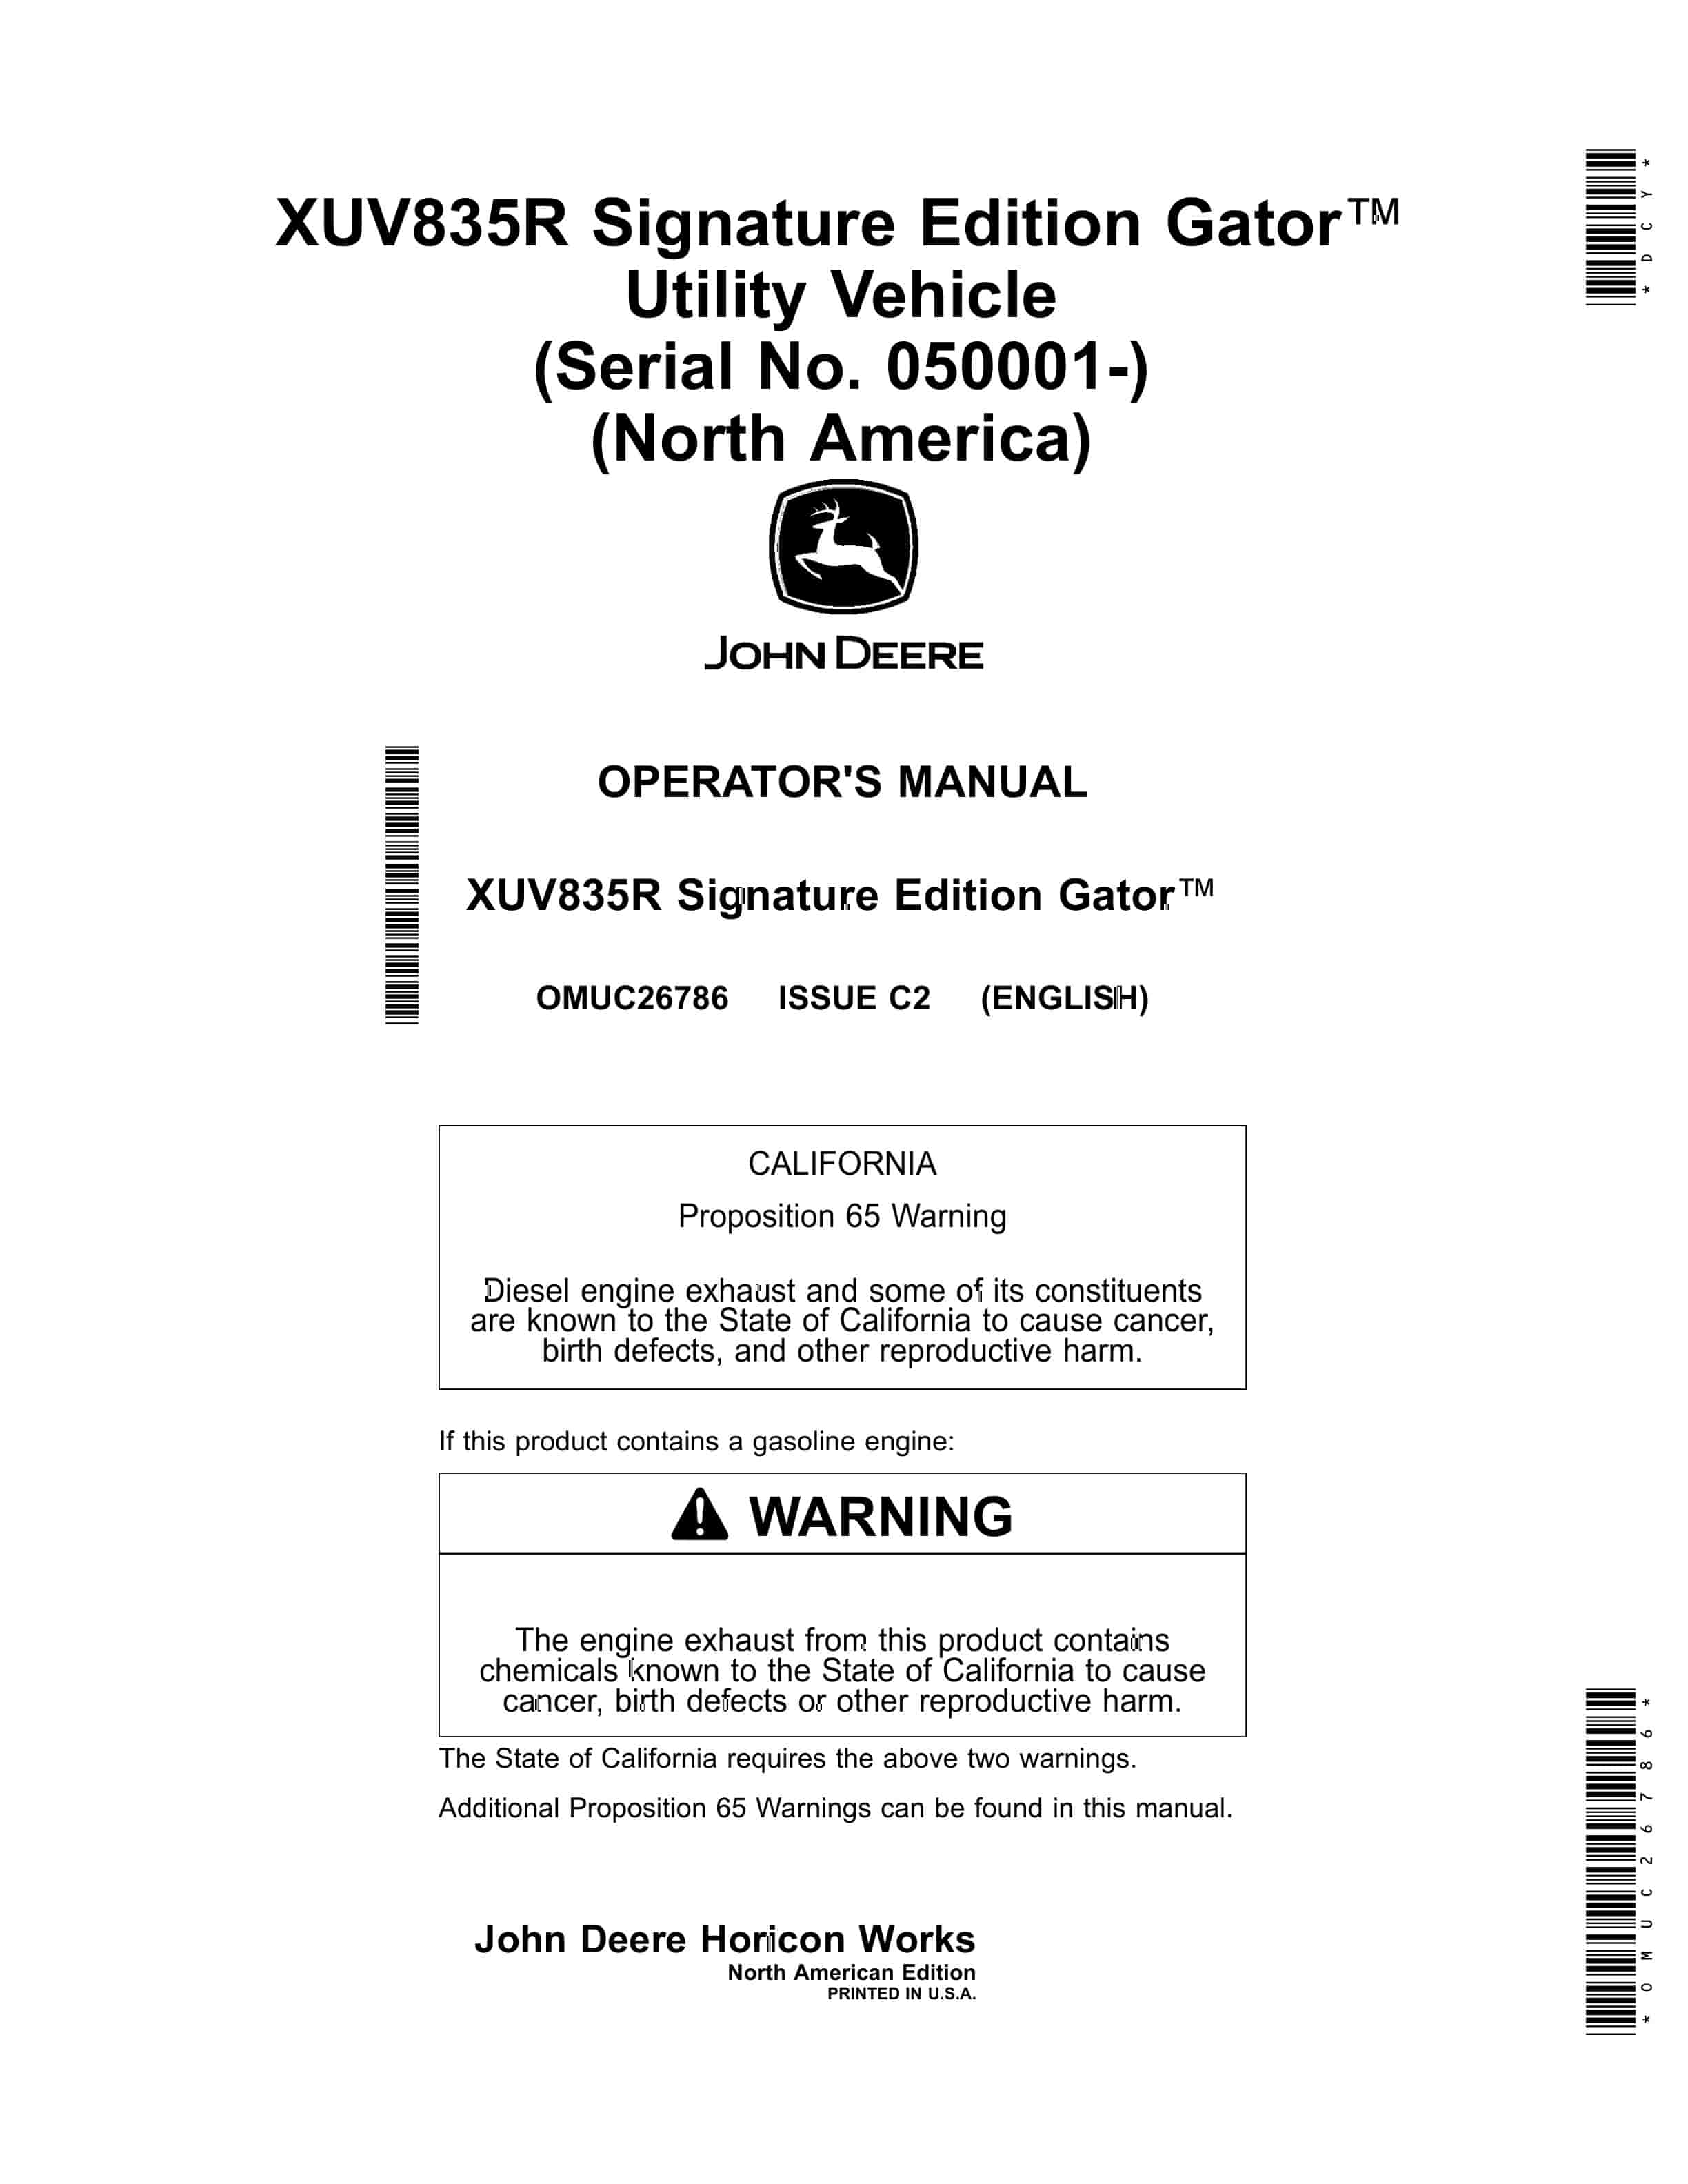 John Deere XUV835R Signature Edition Gator Utility Vehicles Operator Manual OMUC26786 1